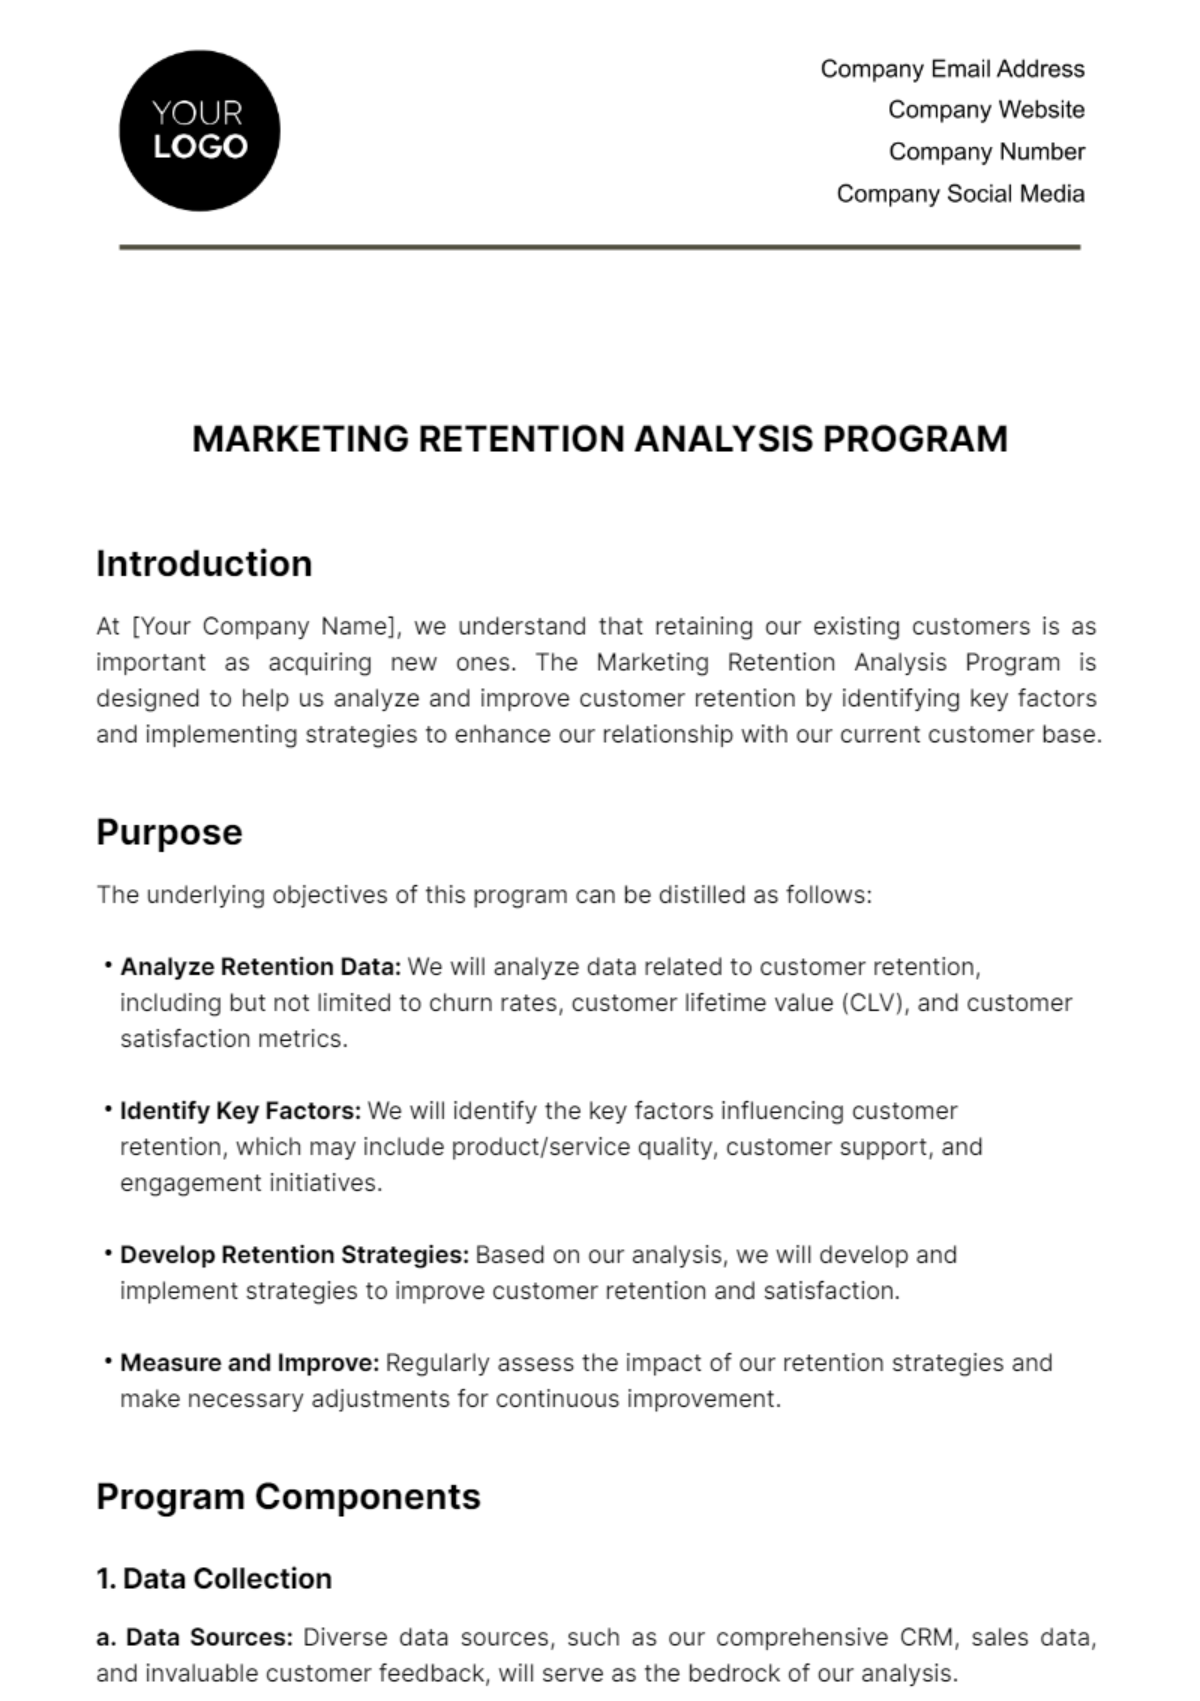 Free Marketing Retention Analysis Program Template